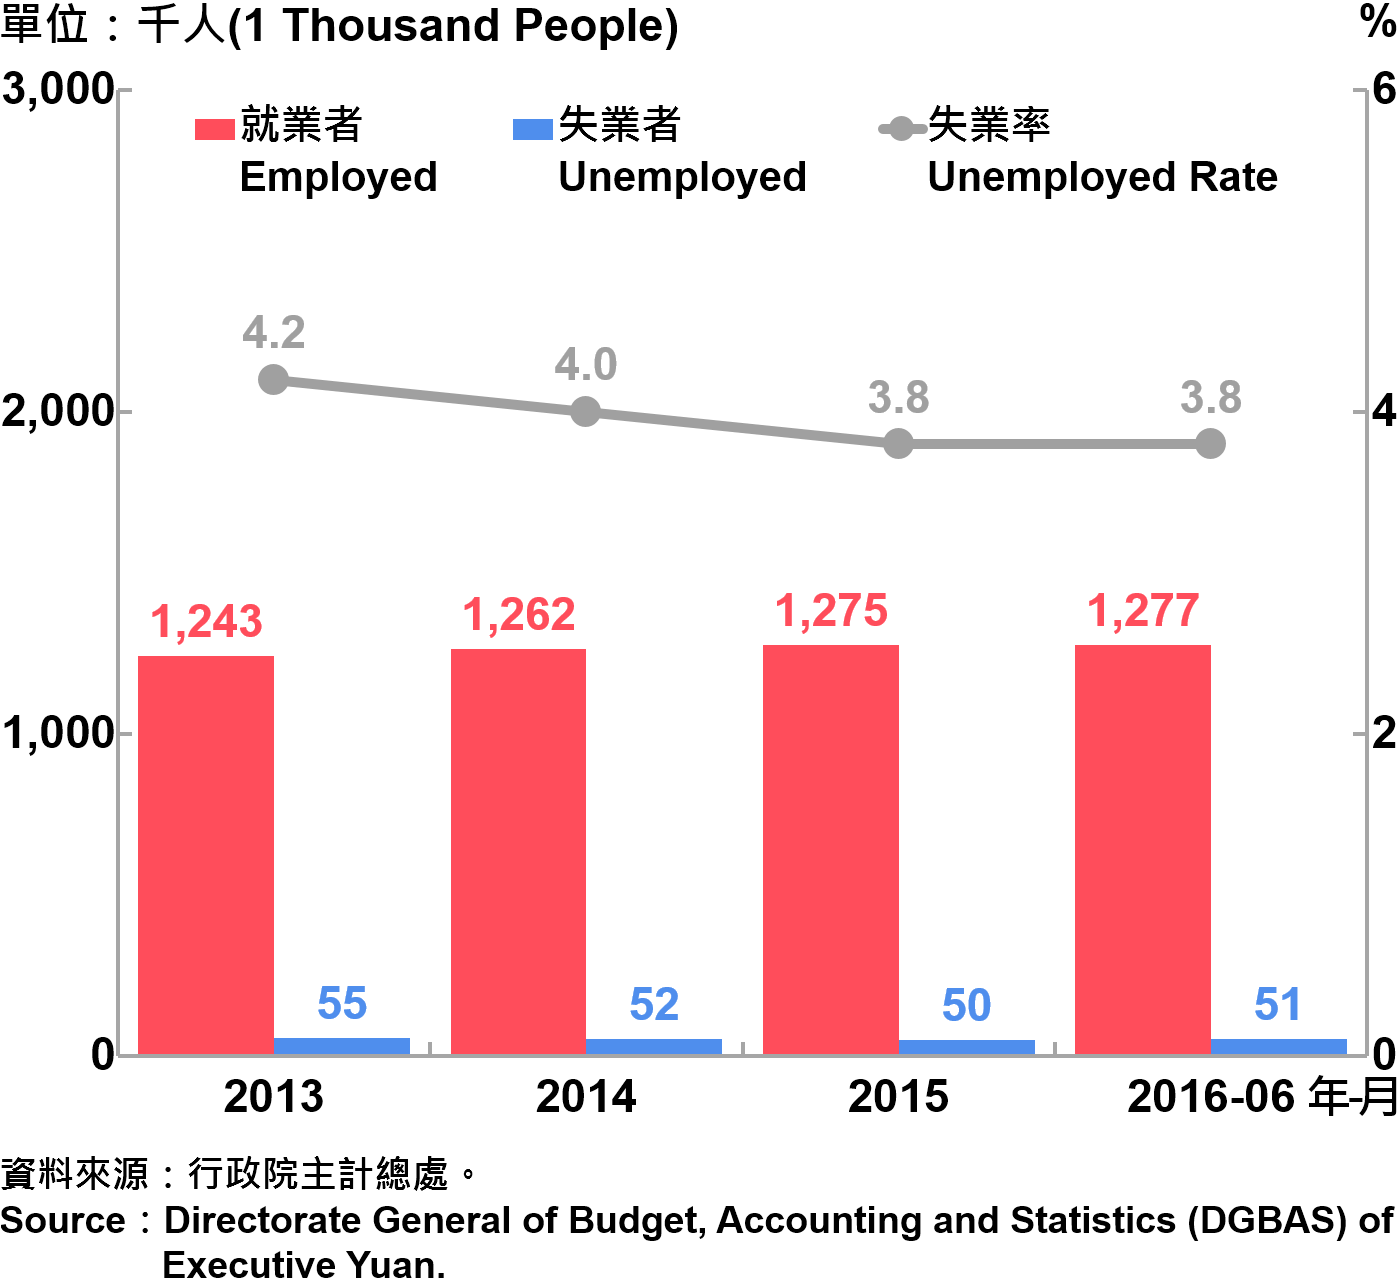 圖4、臺北市勞動力人數統計  Labor Force Statistics in Taipei